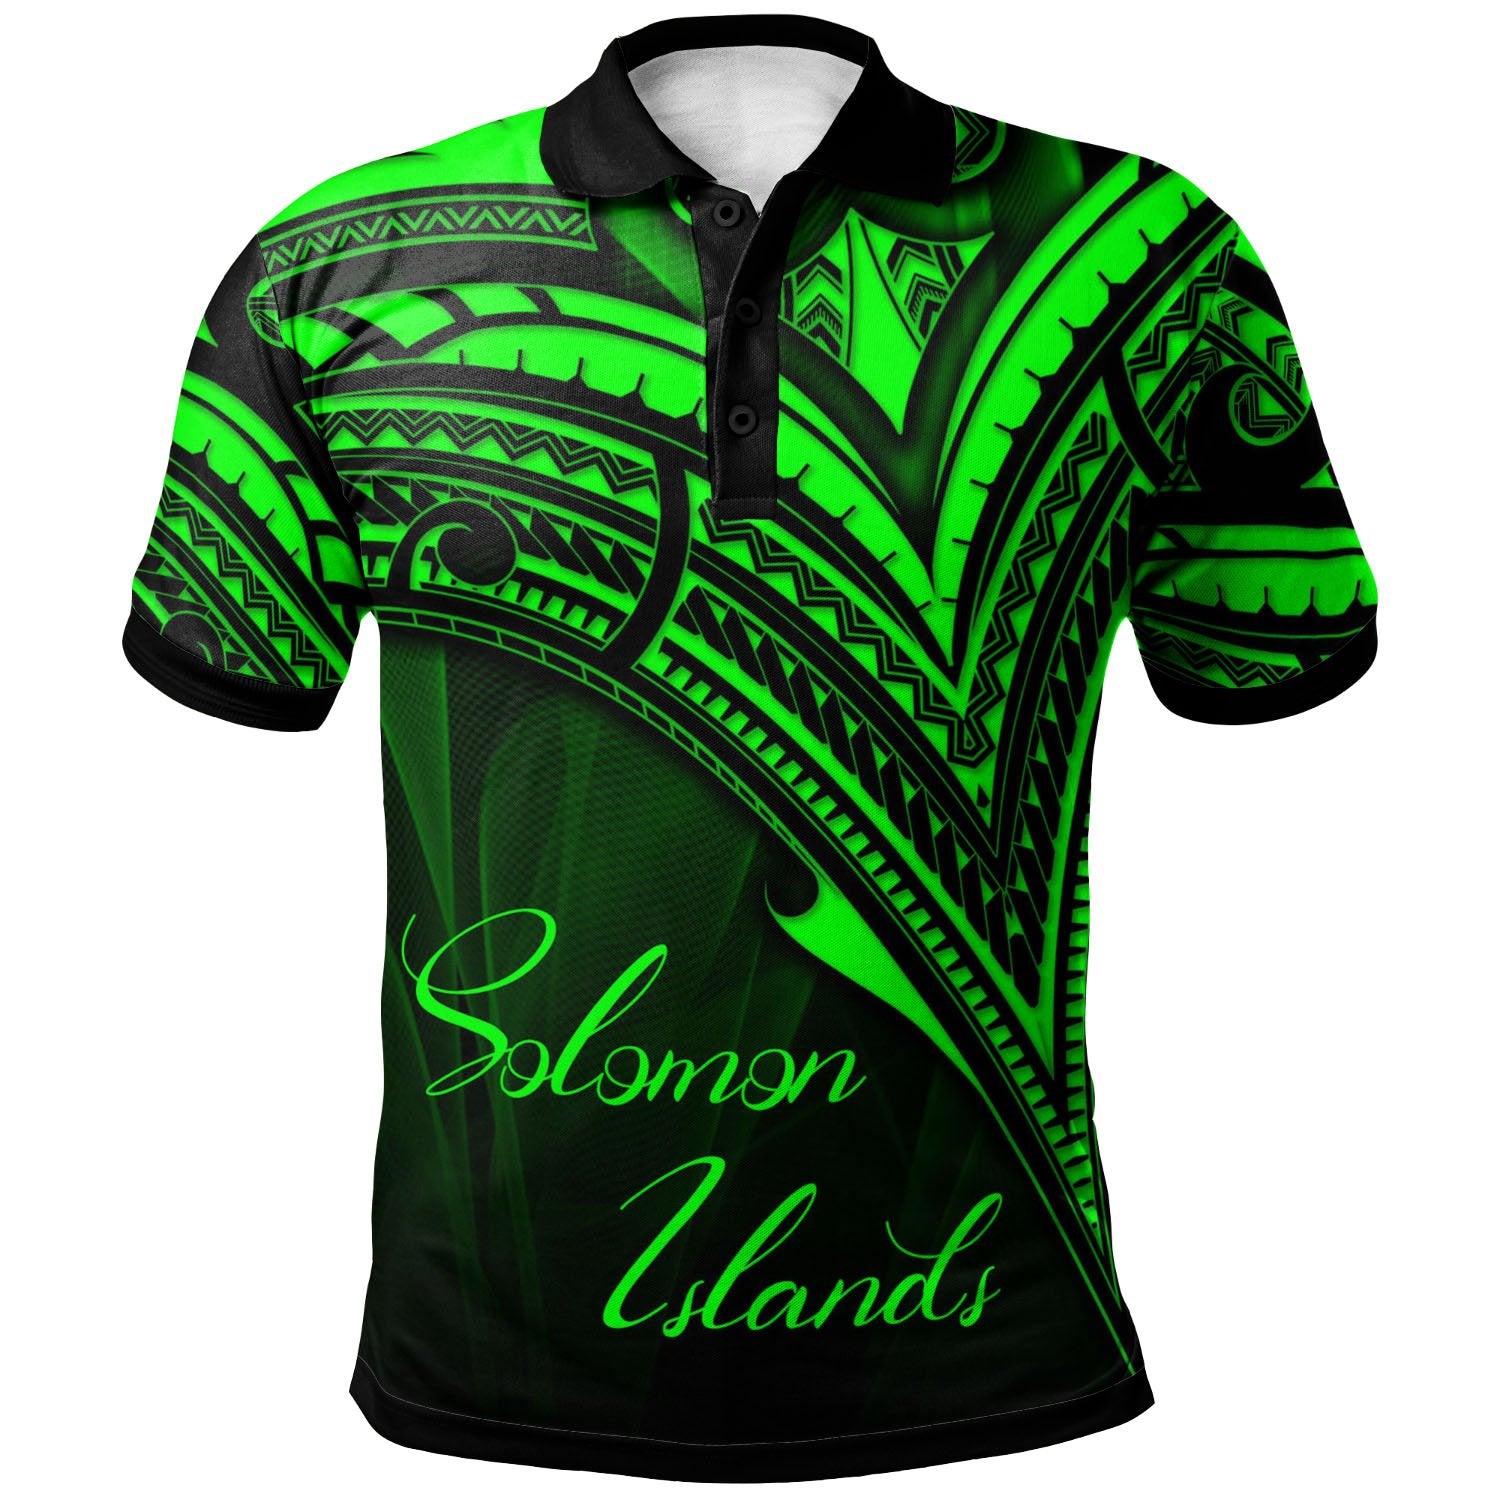 Solomon Islands Polo Shirt Green Color Cross Style Unisex Black - Polynesian Pride